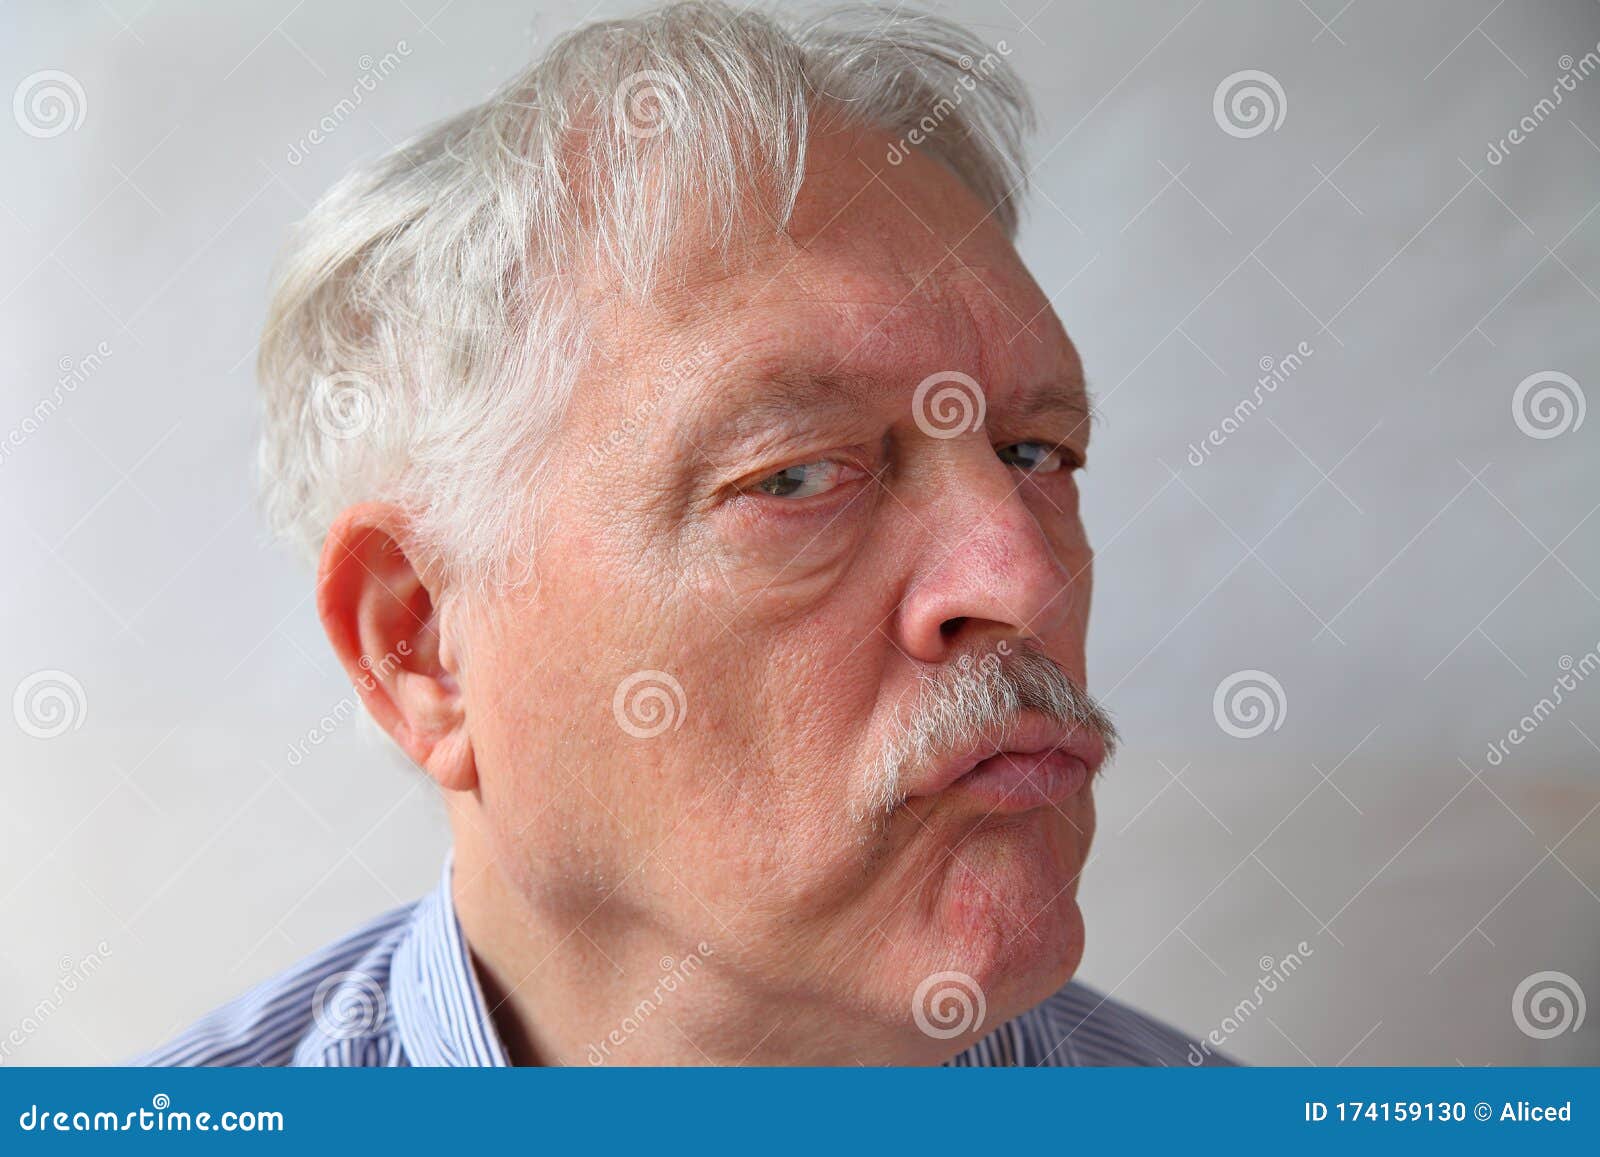 Distrustful senior man stock photo. Image of distrustful - 174159130